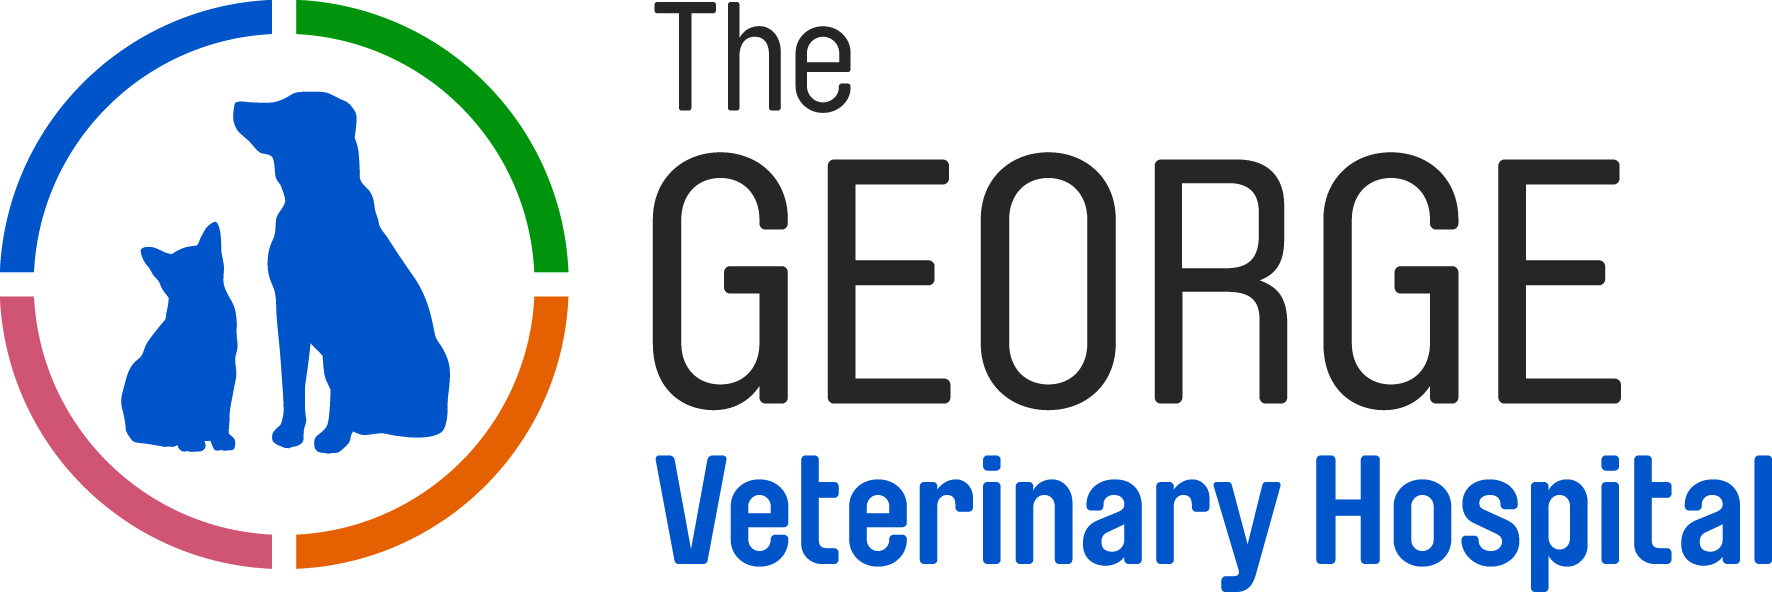 The George Veterinary Hospital - Malmesbury